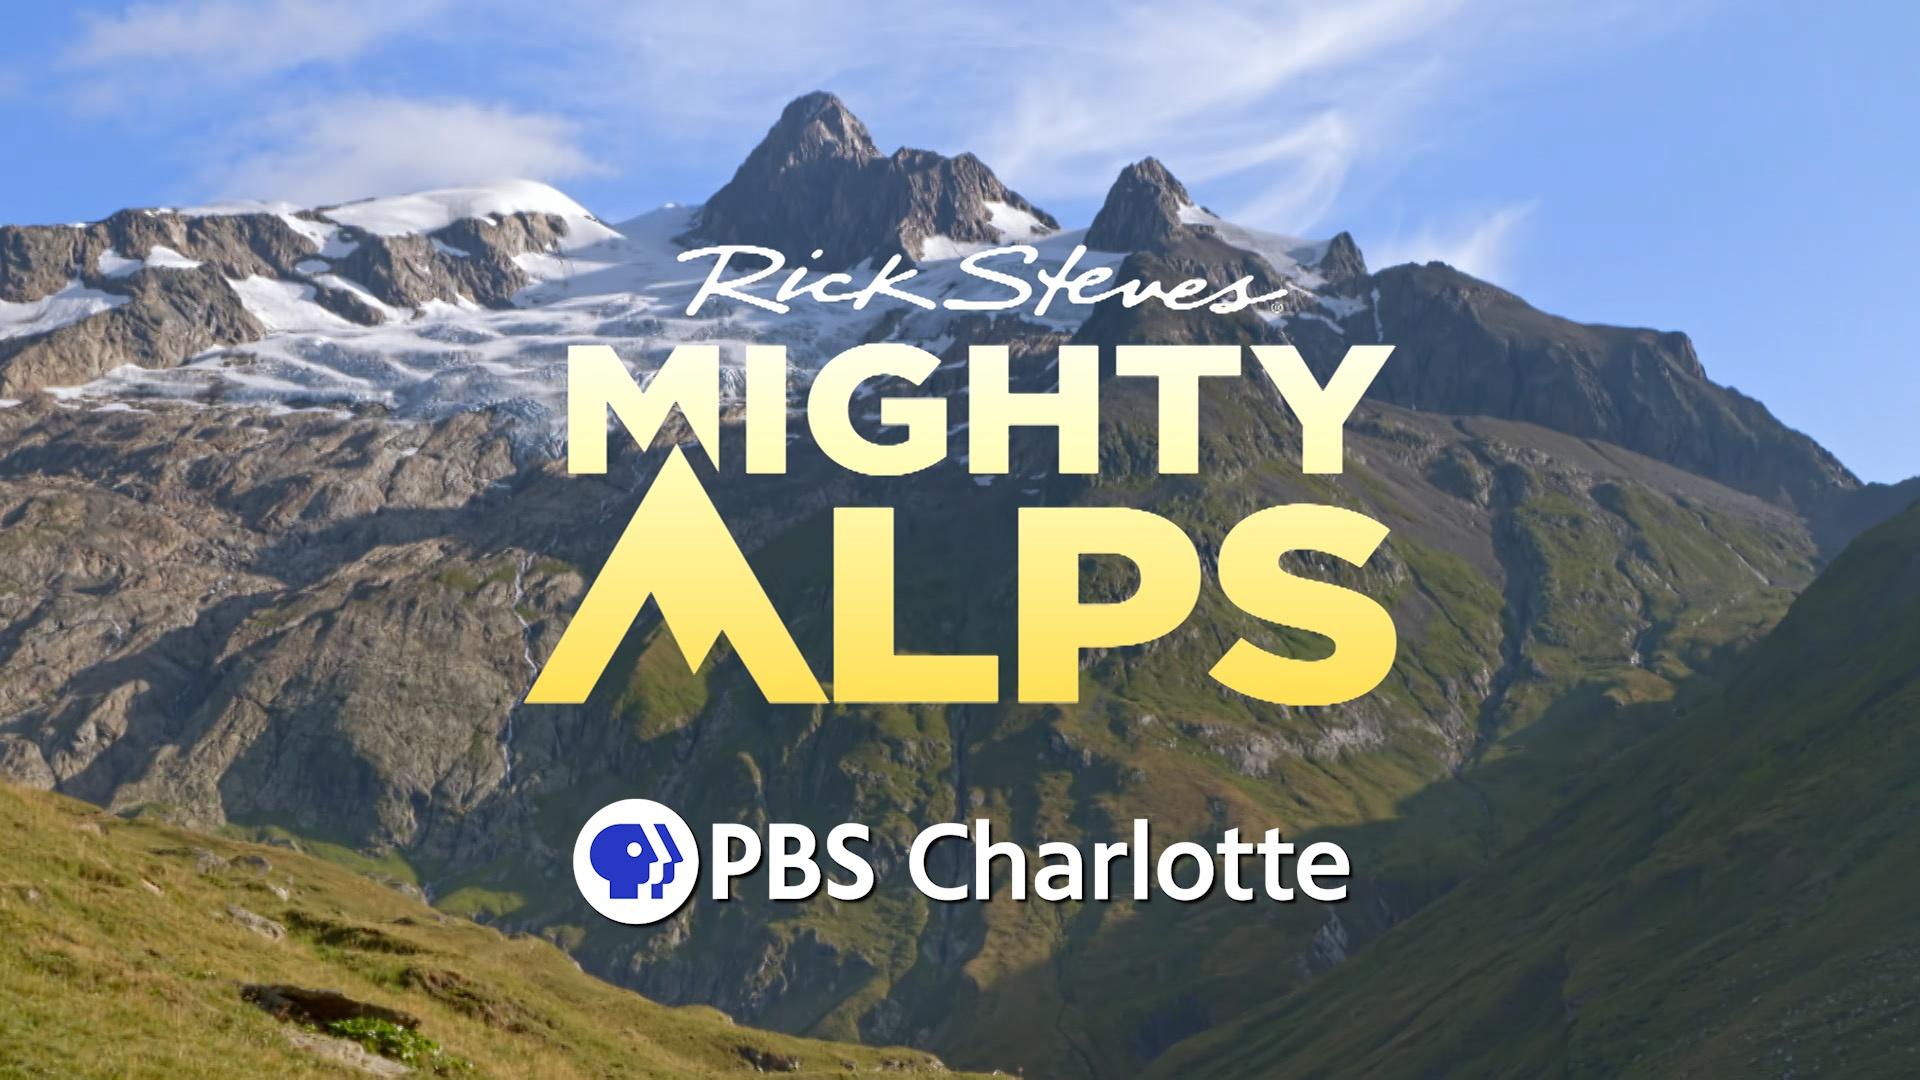 Rick Steves Mighty Alps